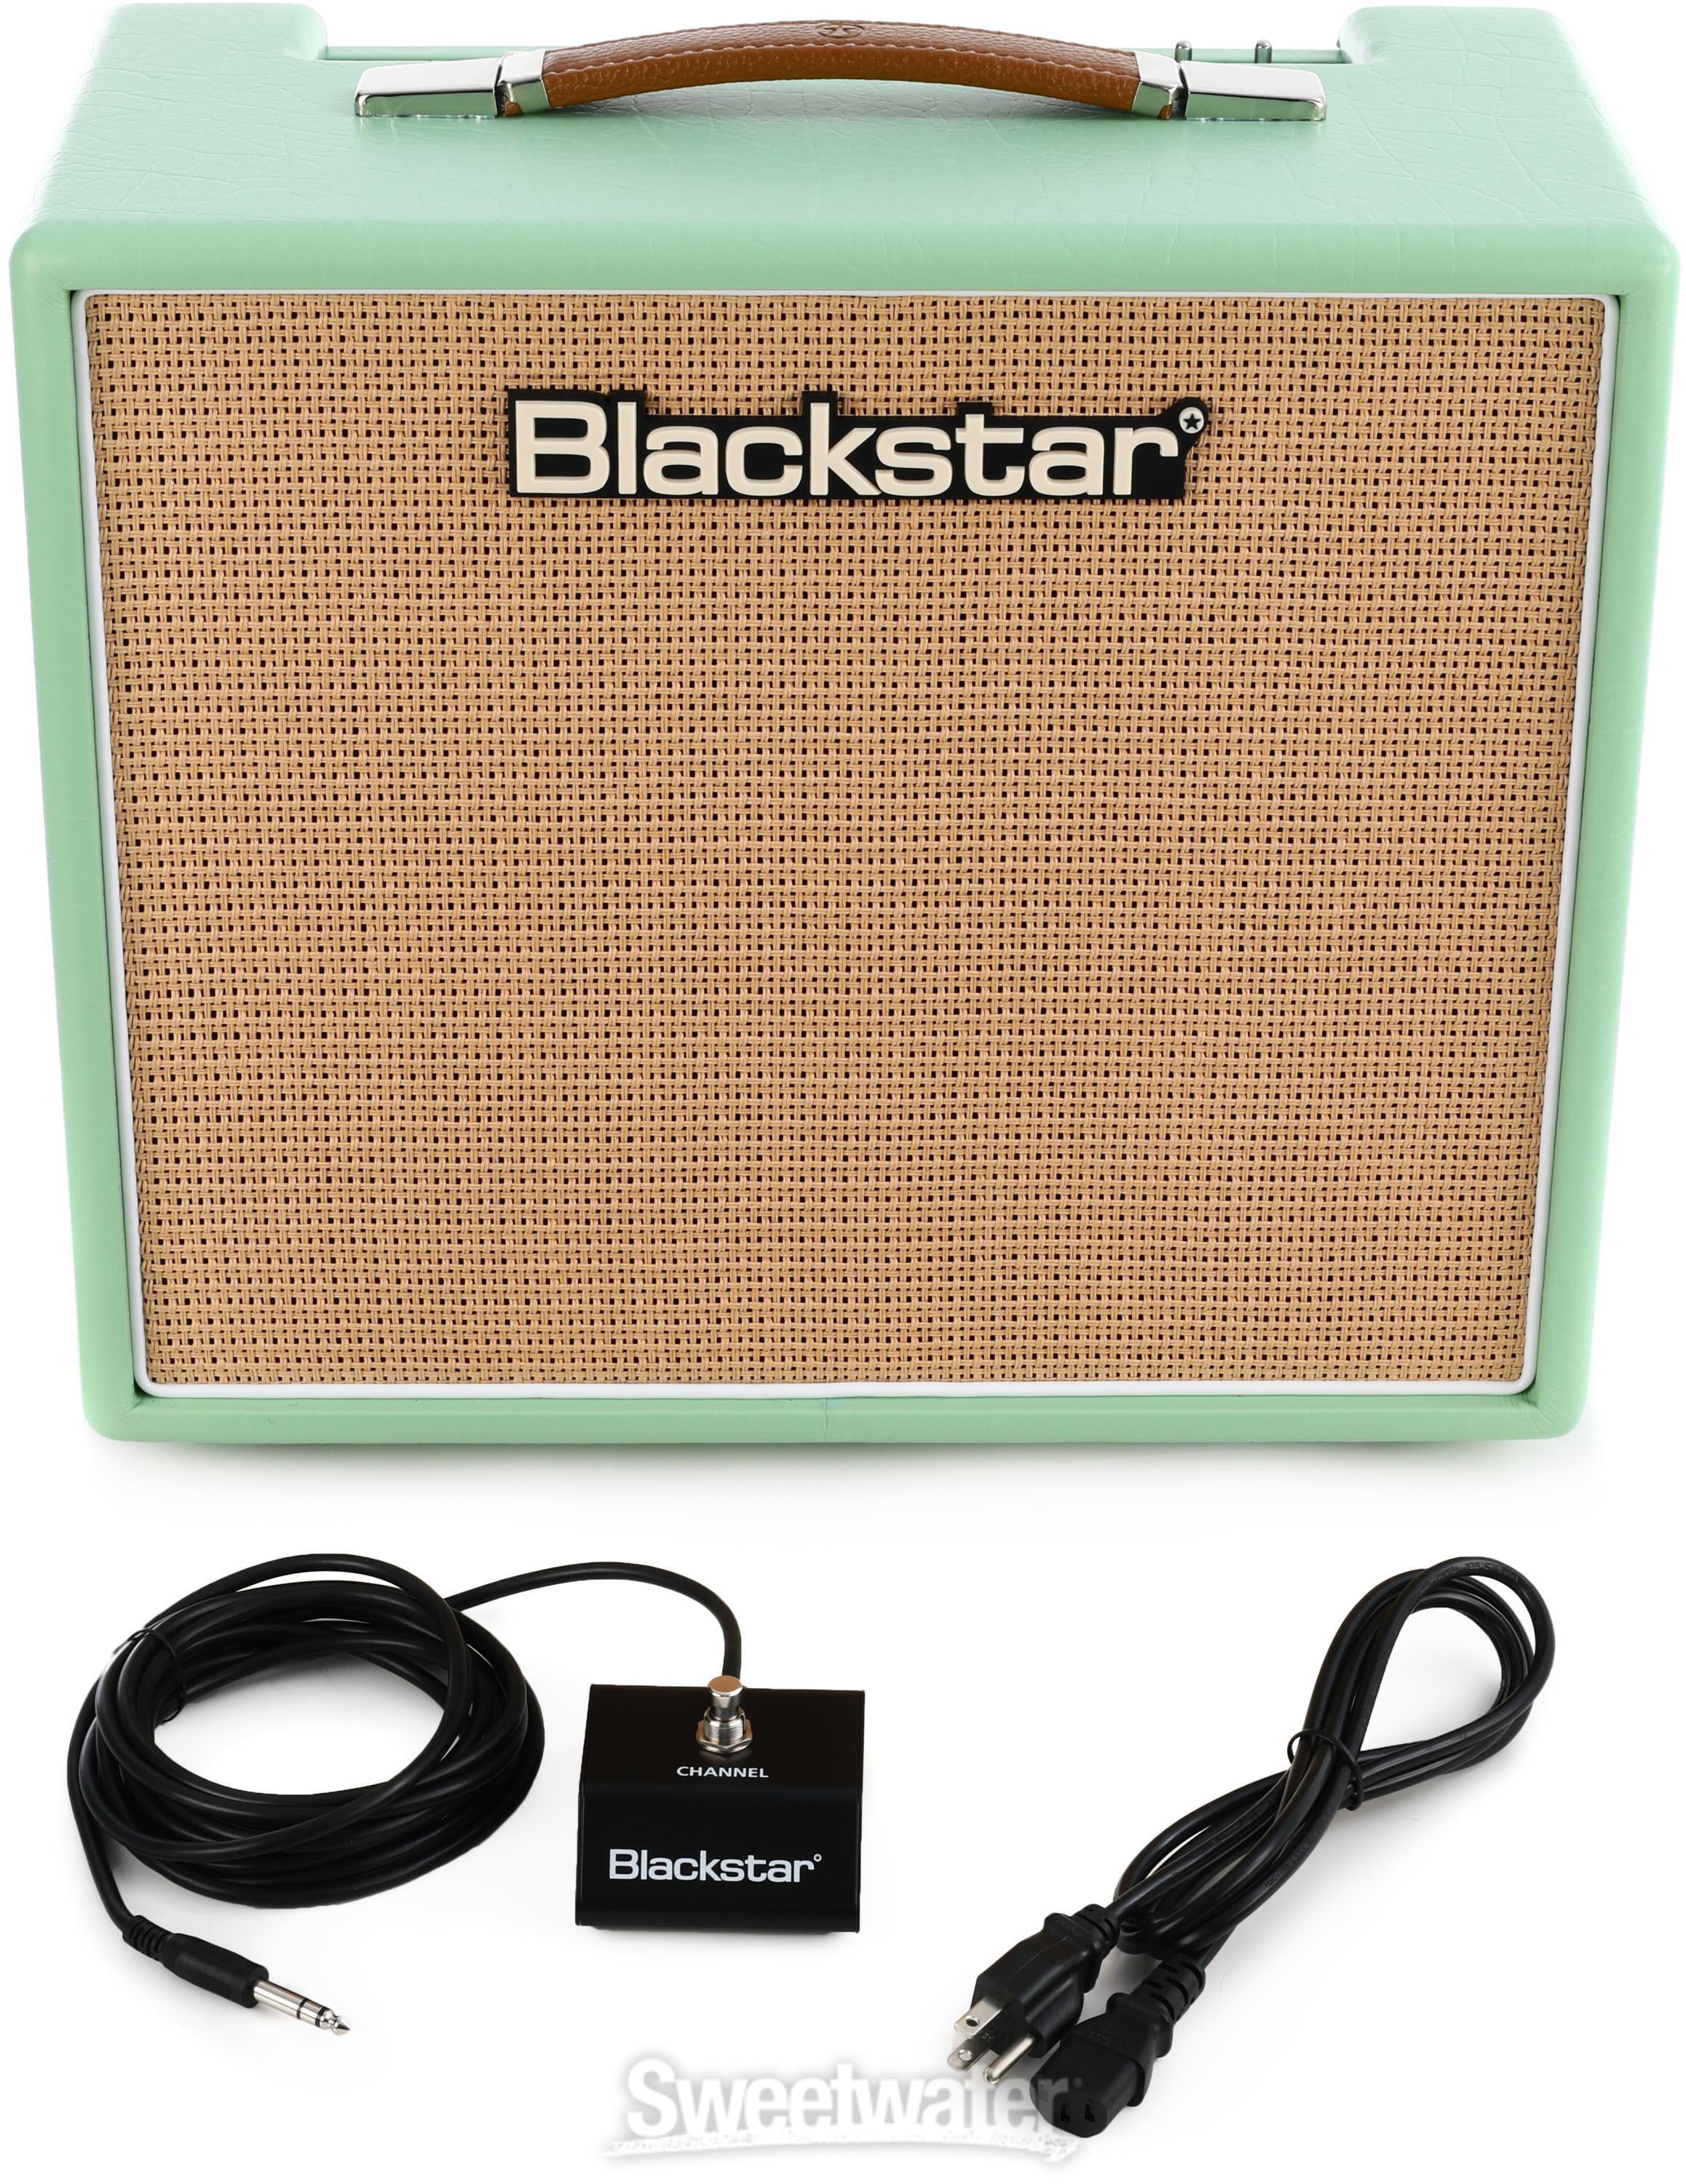 Blackstar Studio 10 6L6 1x12 inch 10-watt Tube Combo Amp - Surf